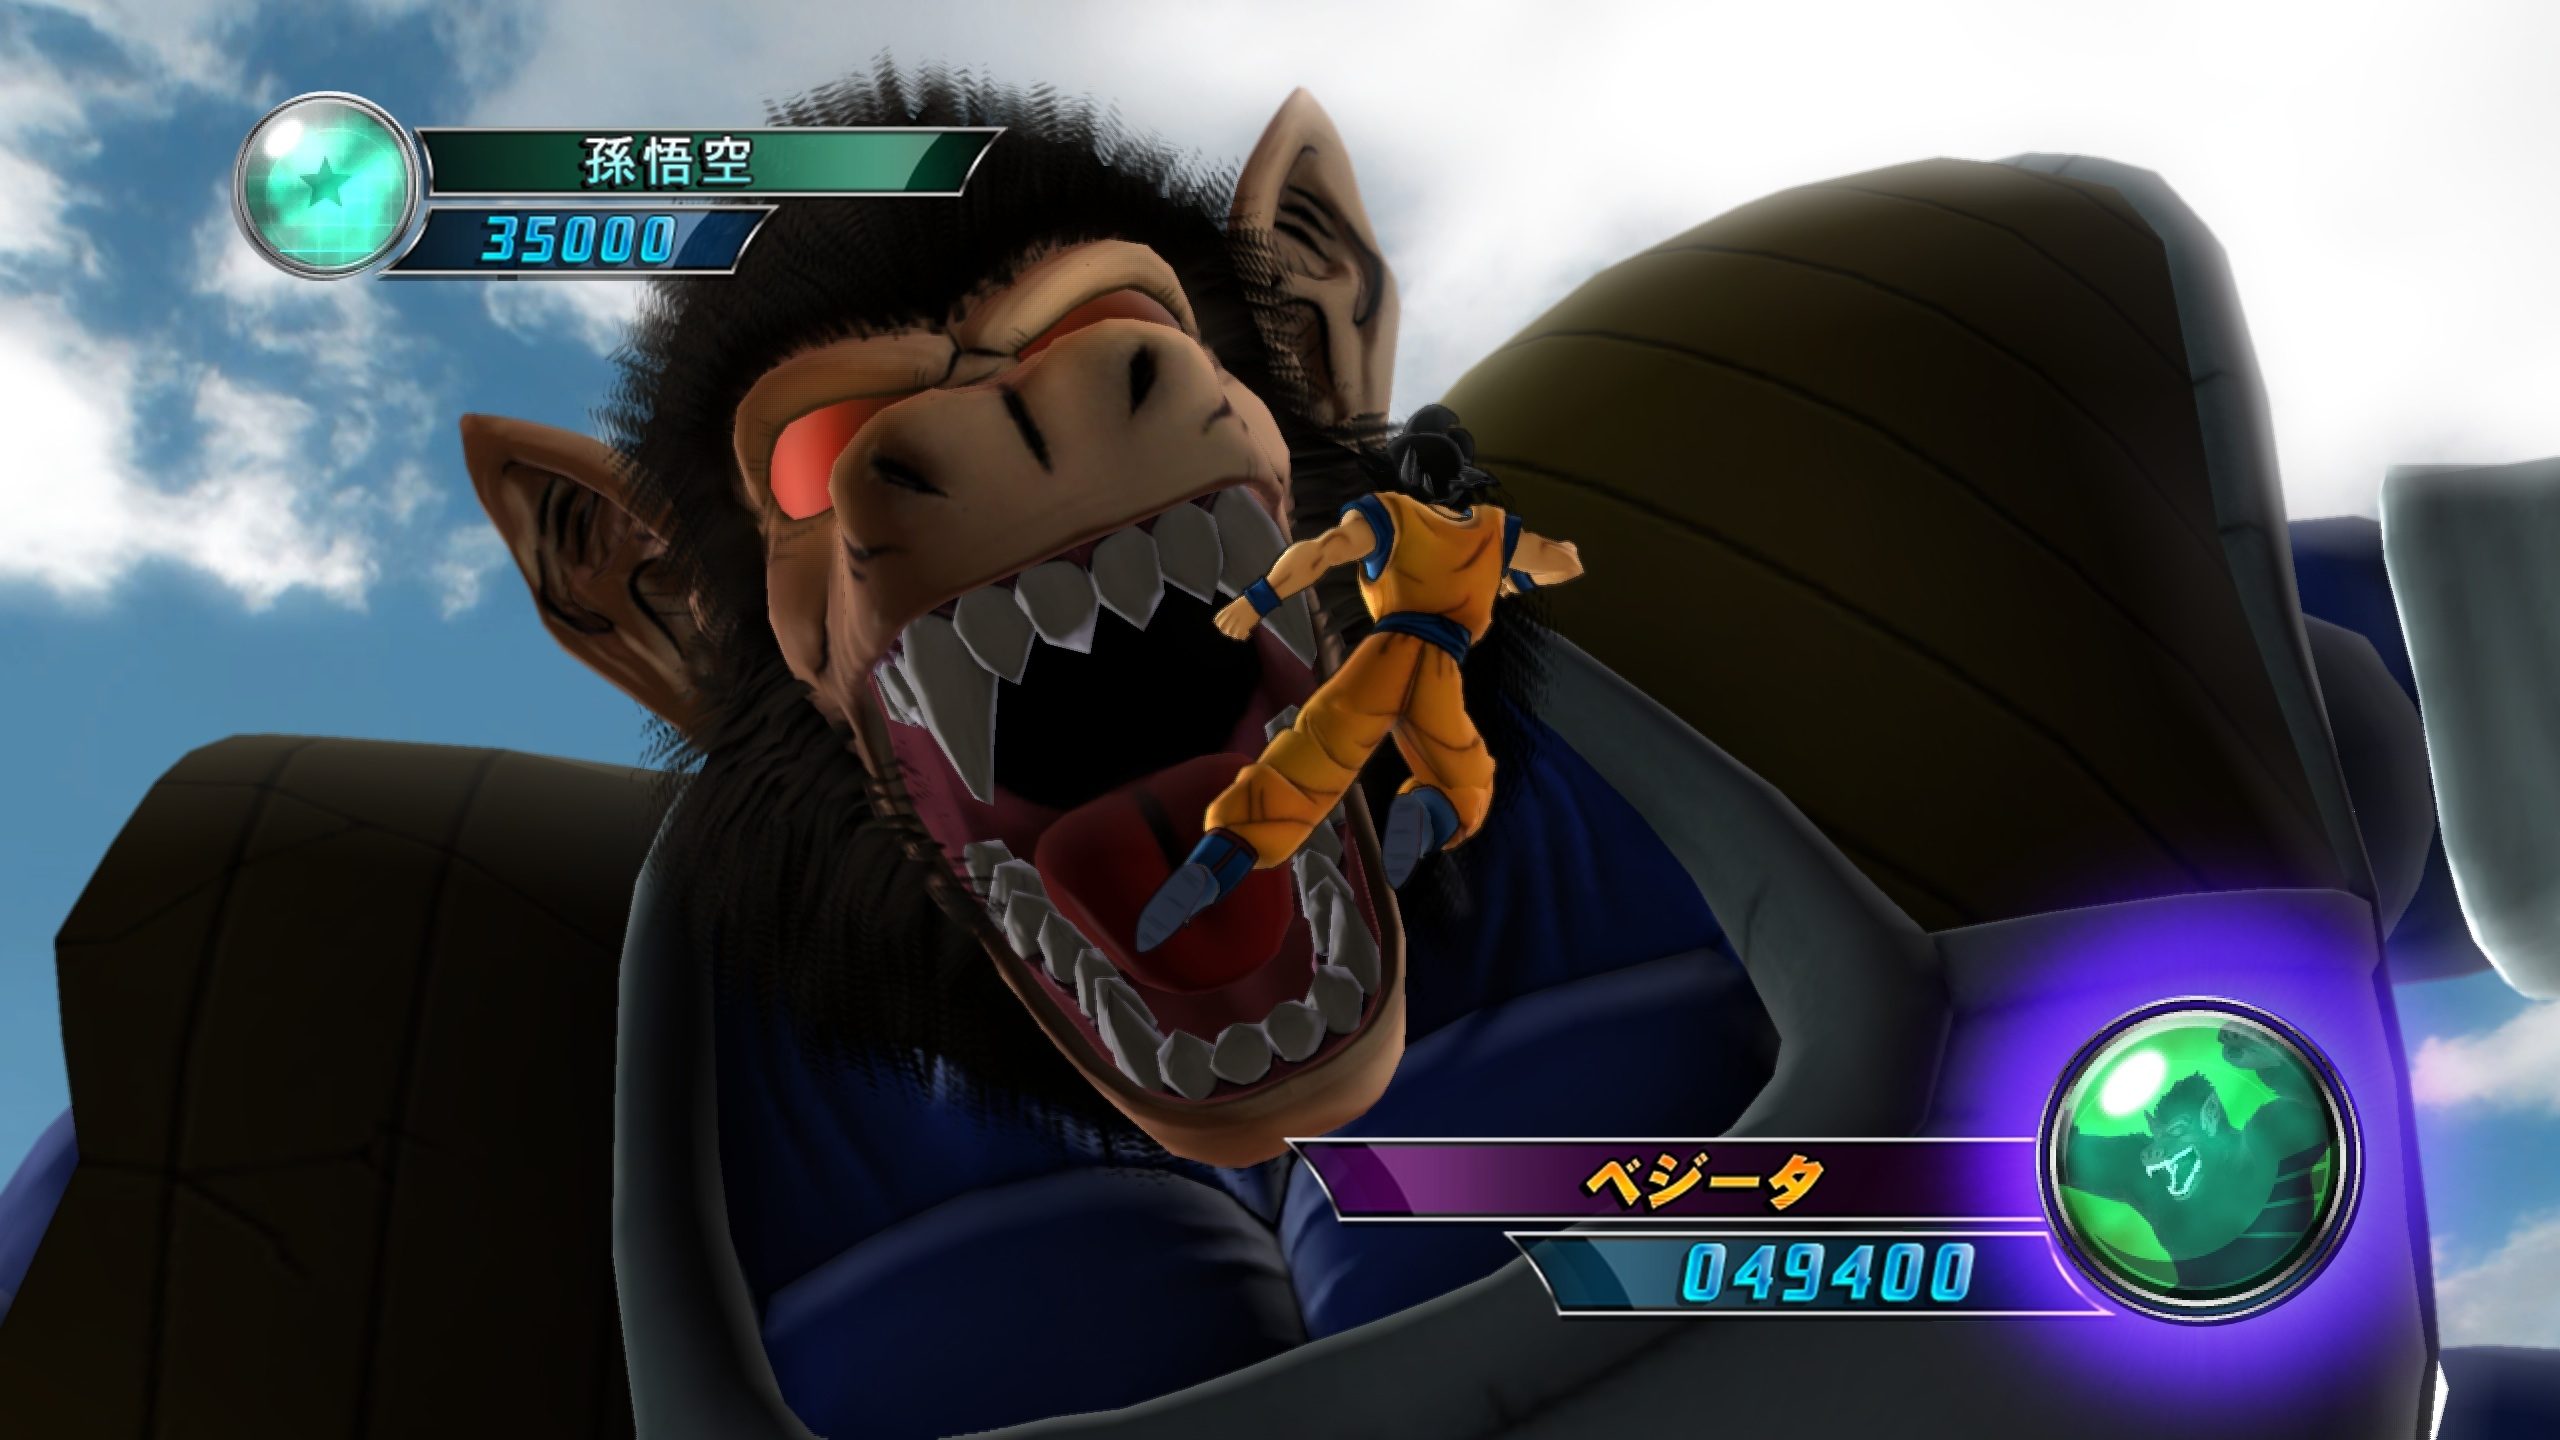 rebanada látigo Así llamado Análisis de Dragon Ball Z Ultimate Tenkaichi para Xbox 360 y PS3]